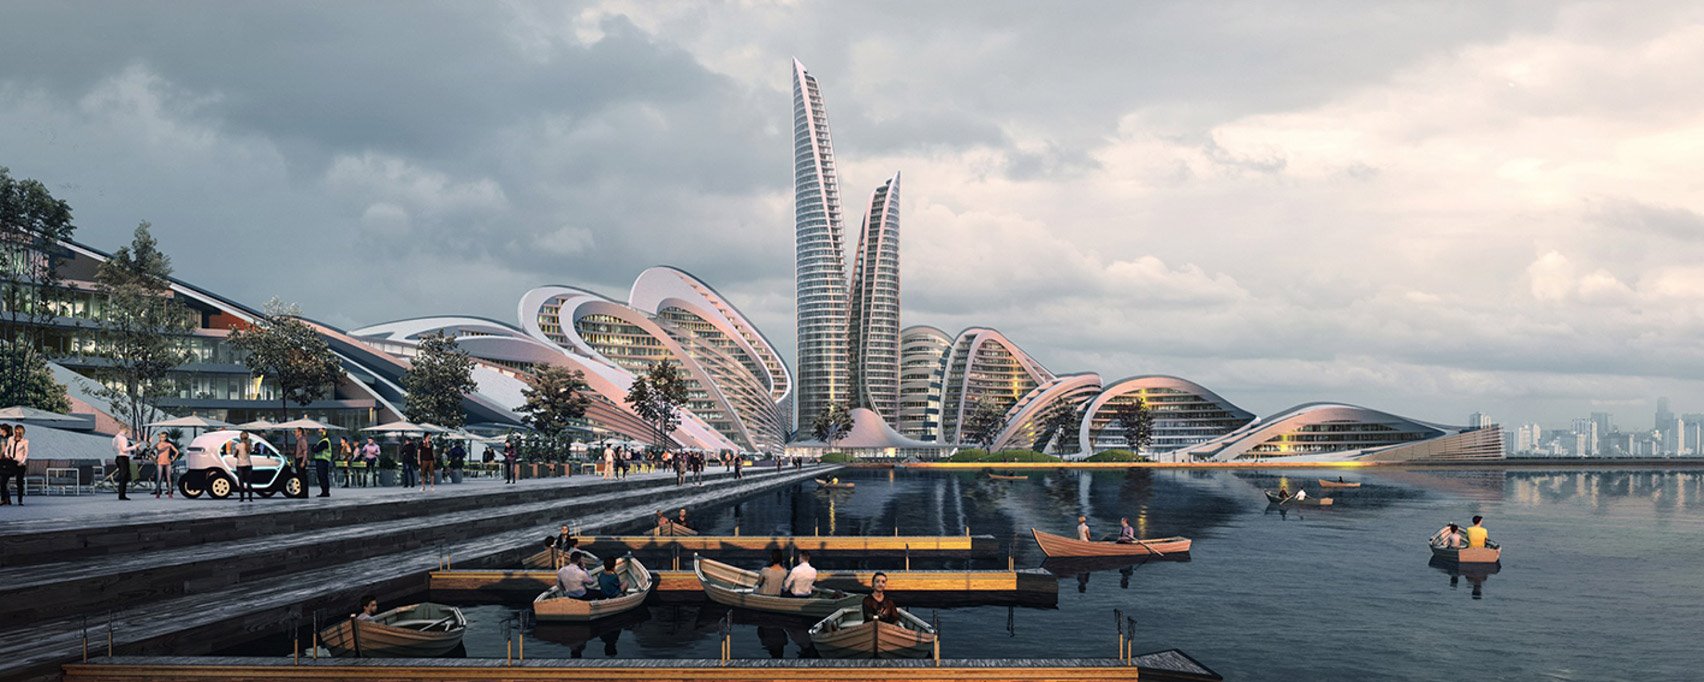 rublyovo-arkhangelskoye-moscow-smart-city-zaha-hadid-architects-flying-architecture 2